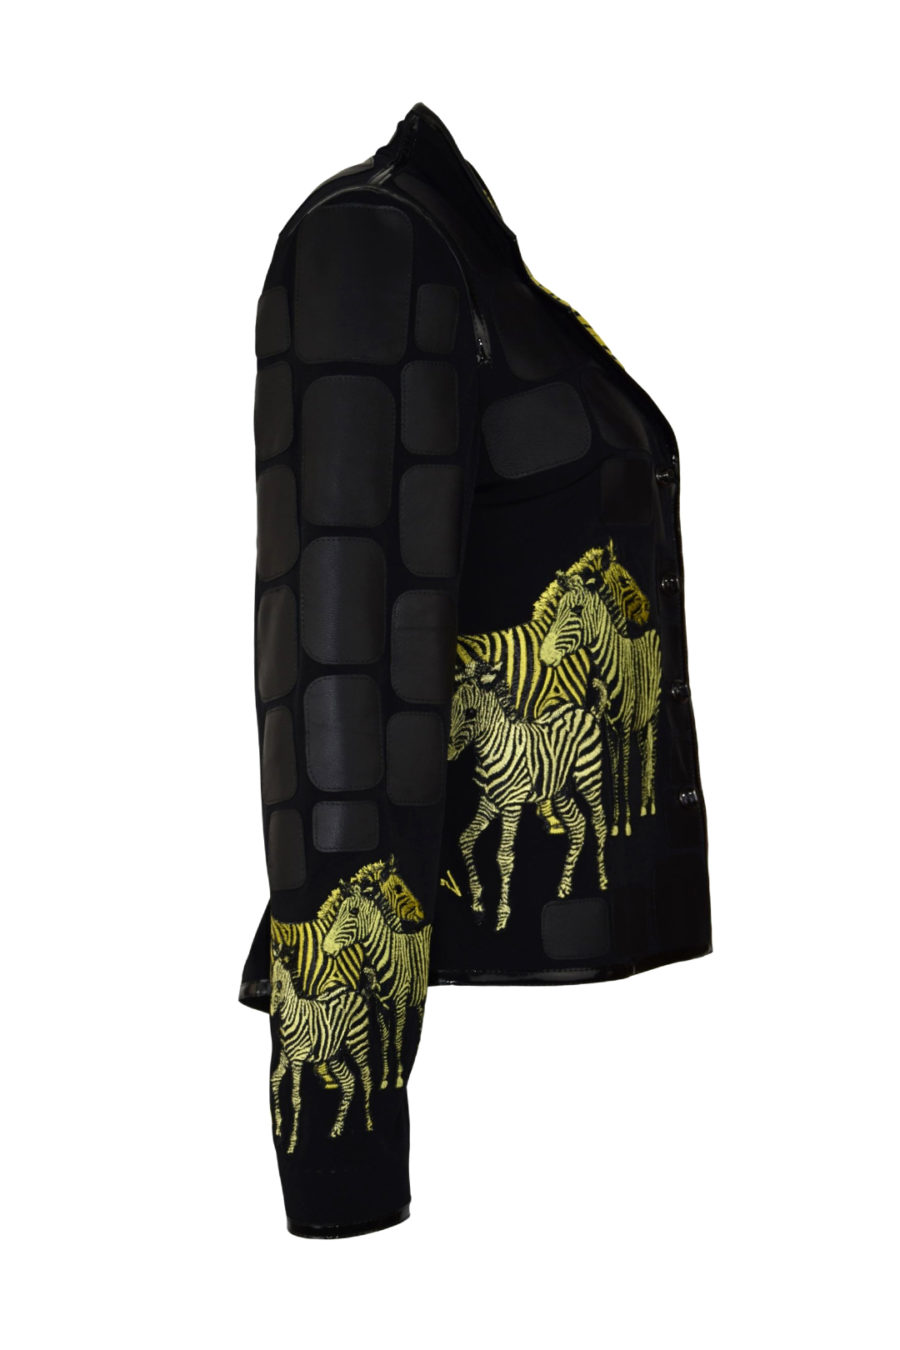 Jacke mit besticktem Revers, Nappaleder-Patches, und "zebra-embroidery" 4 Motive